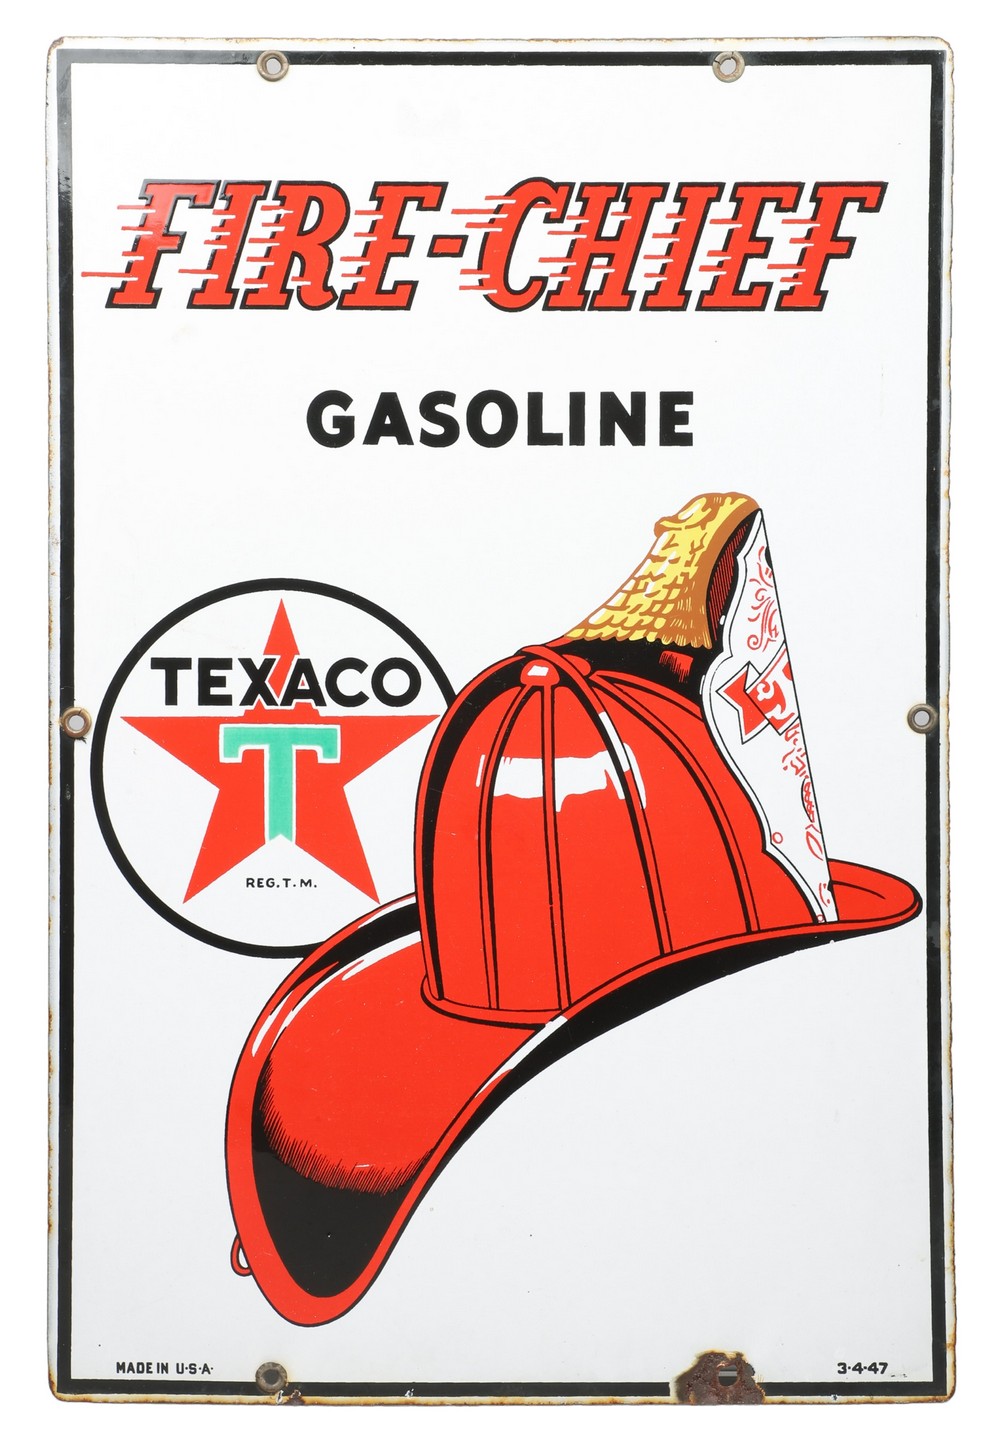 Texaco fire chief gasoline enameled